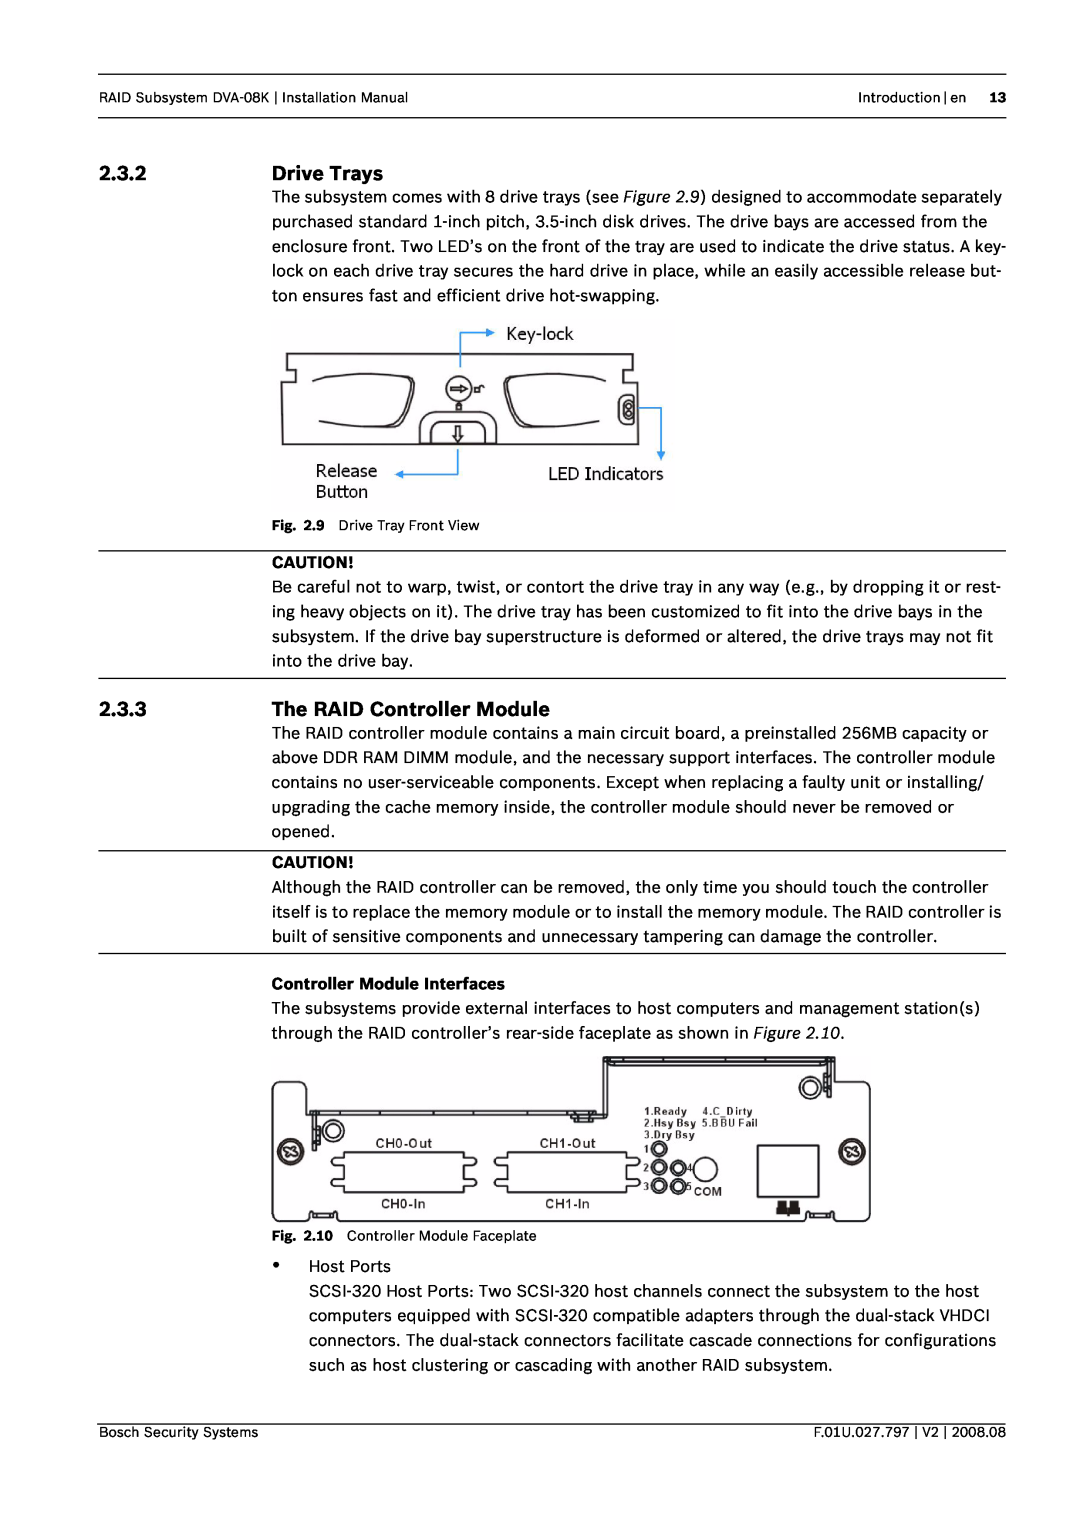 Bosch Appliances DVA-08K manual 2.3.2Drive Trays, 2.3.3, The RAID Controller Module, Controller Module Interfaces 